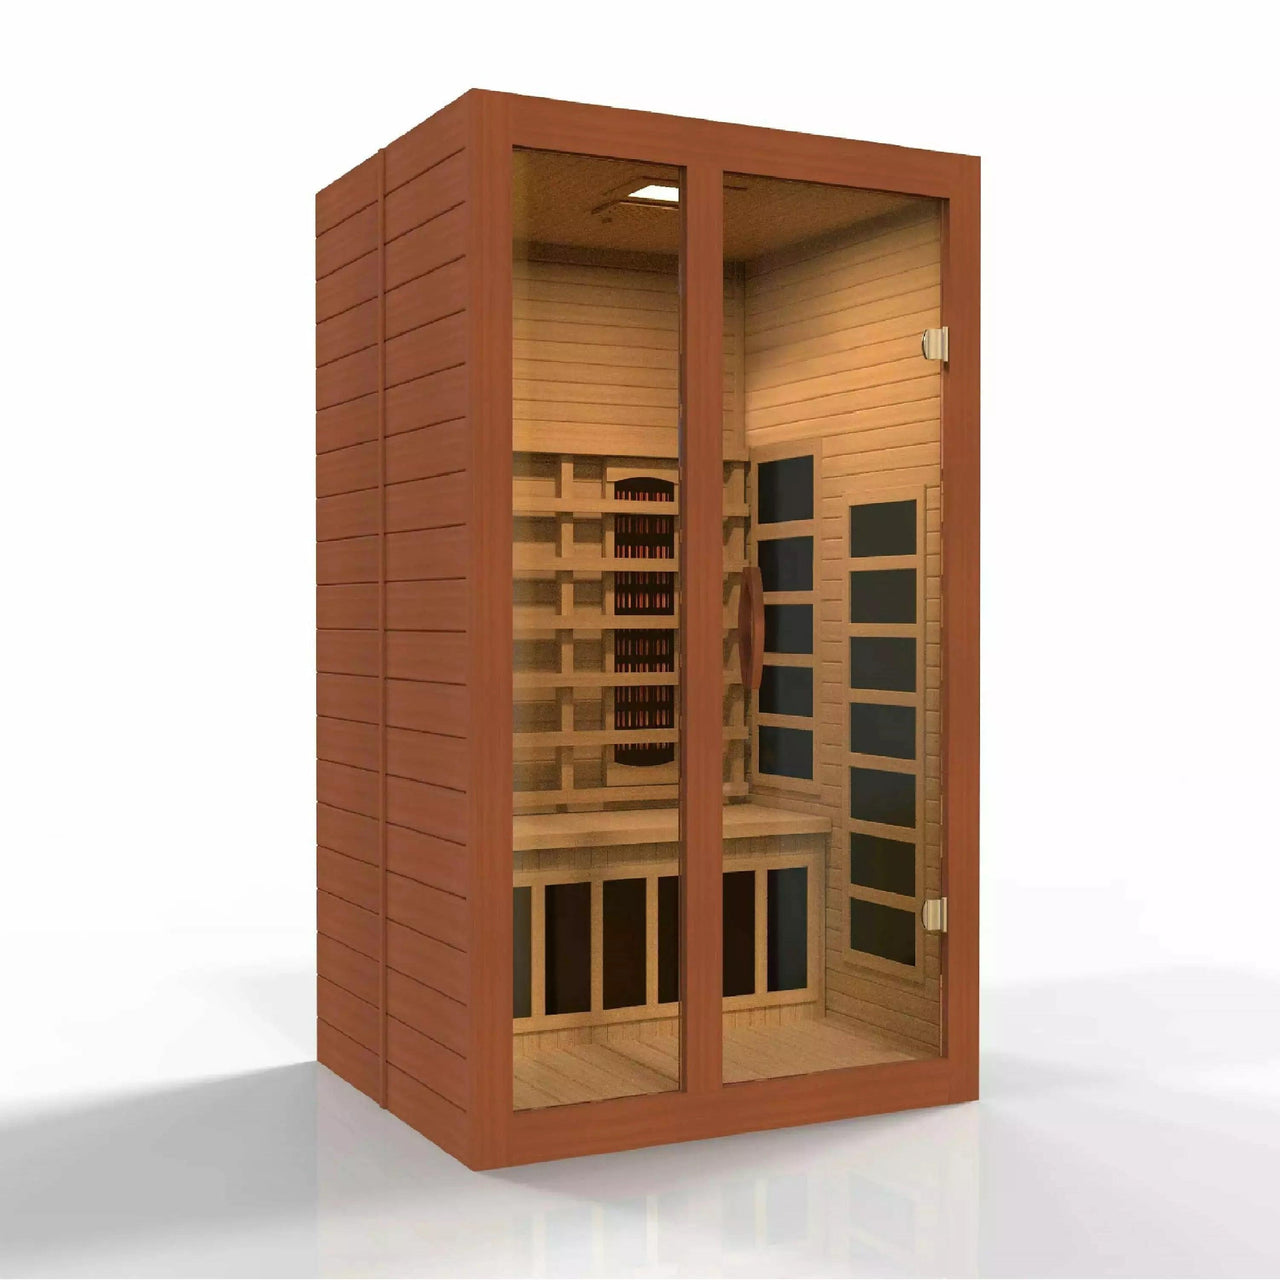 Golden Designs Sauna: Santiago 2 Person Full Spectrum Infrared Sauna - Canadian Hemlock - Fire Pit Stock